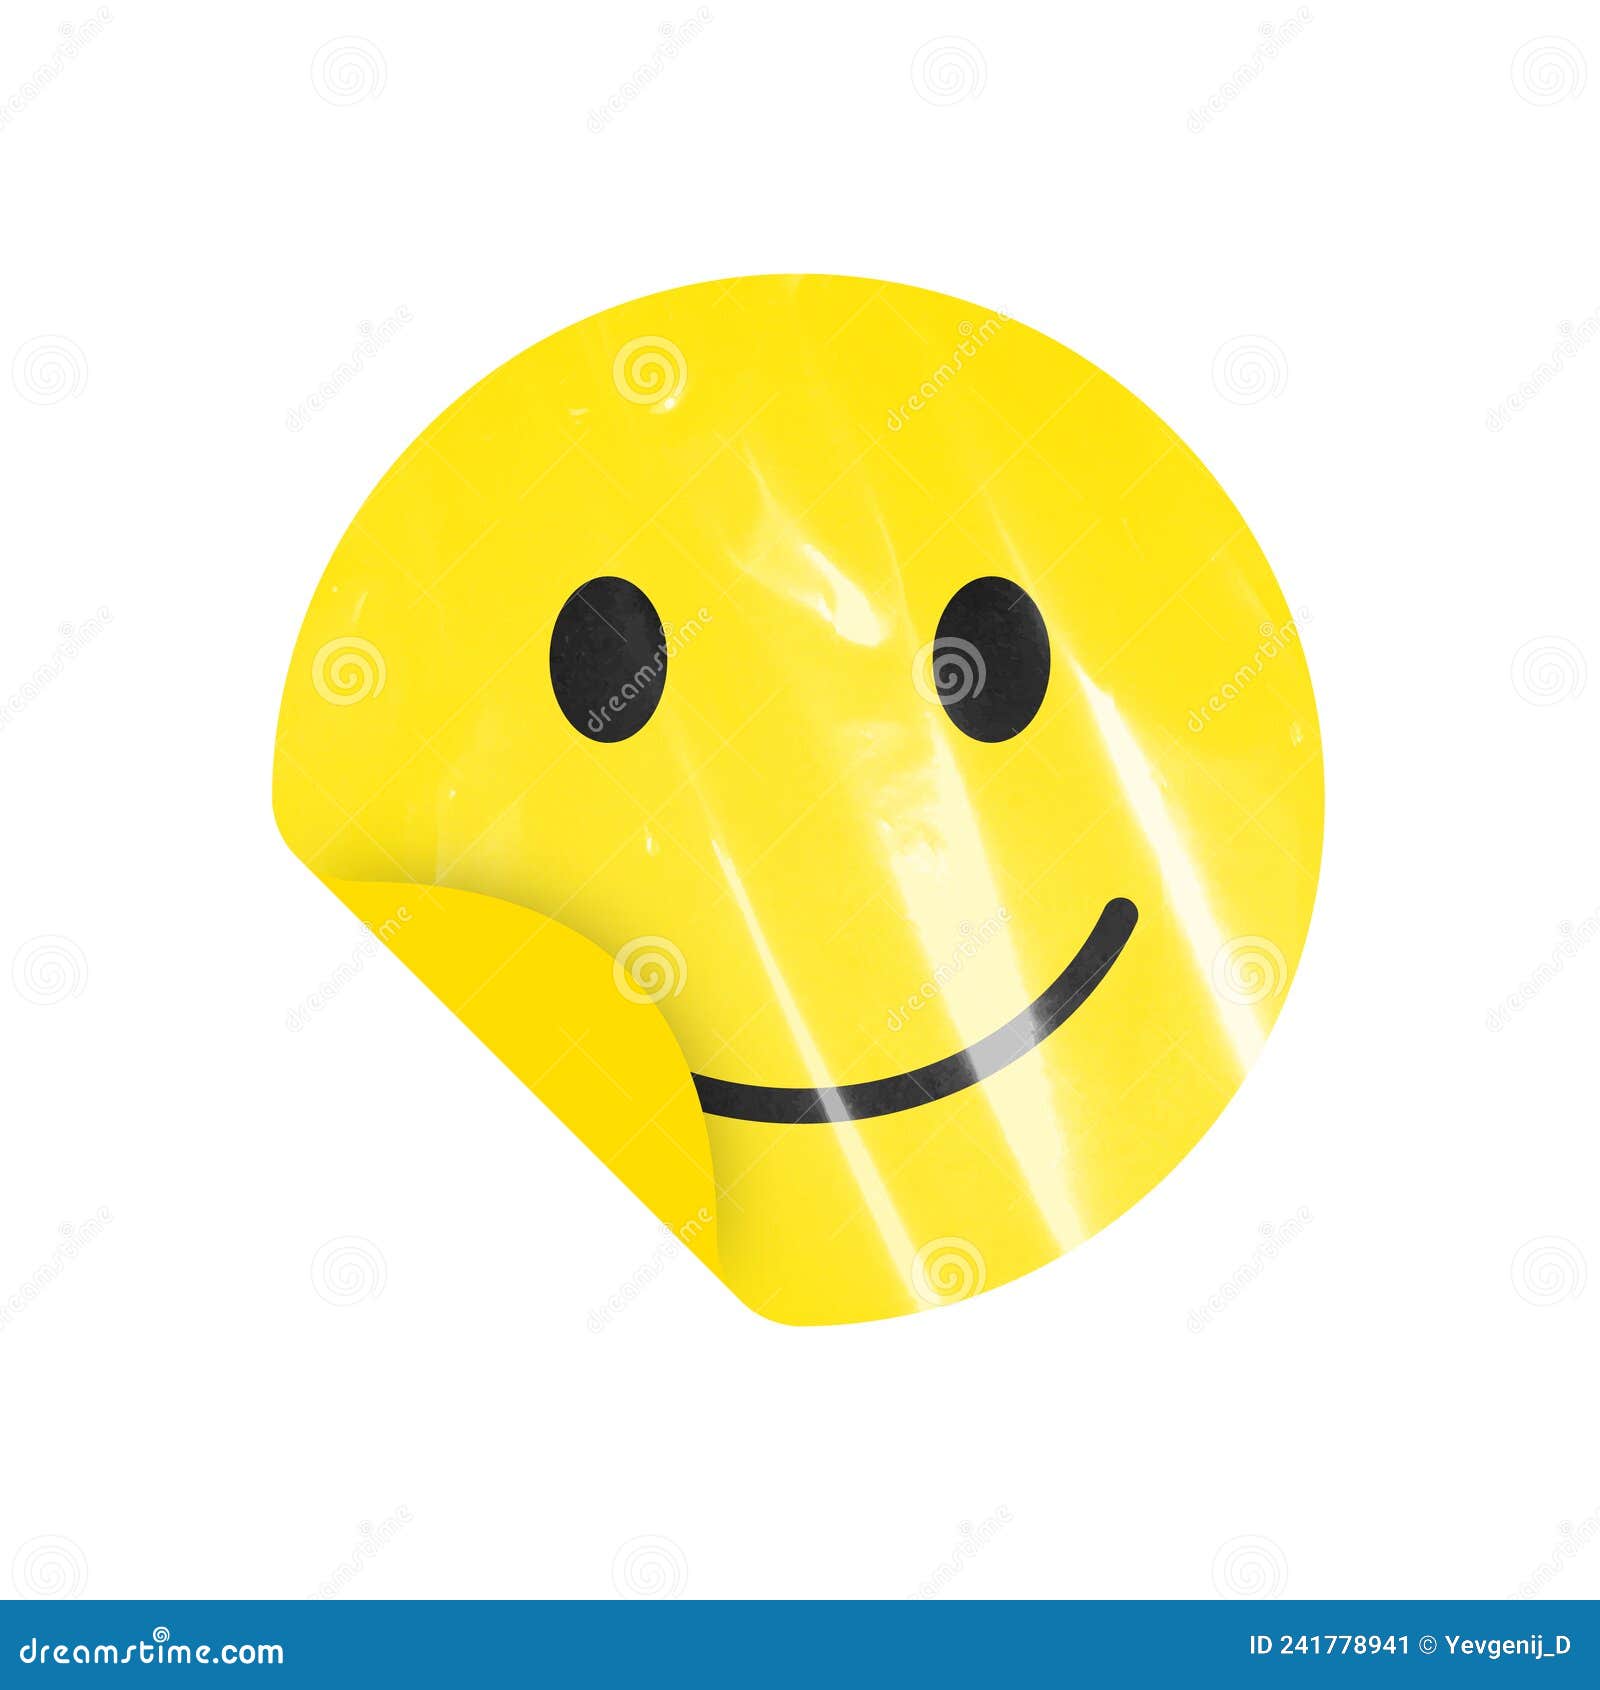 Free Vector  Acid emoji stickers set